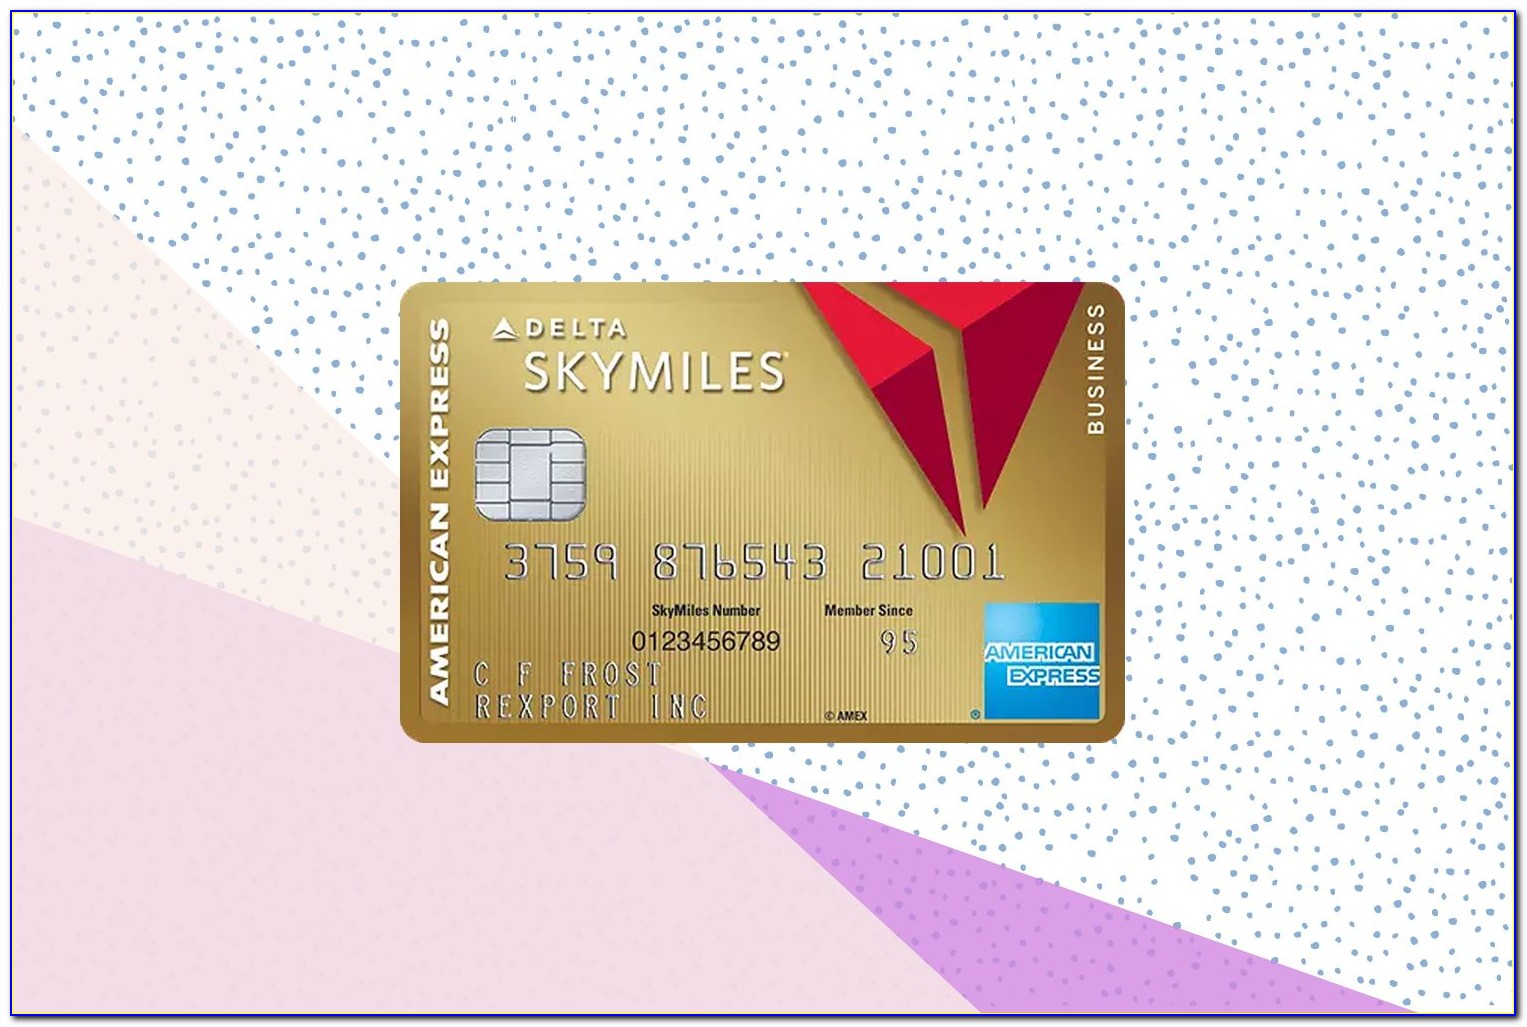 Delta Gold Credit Card Free Checked Bag